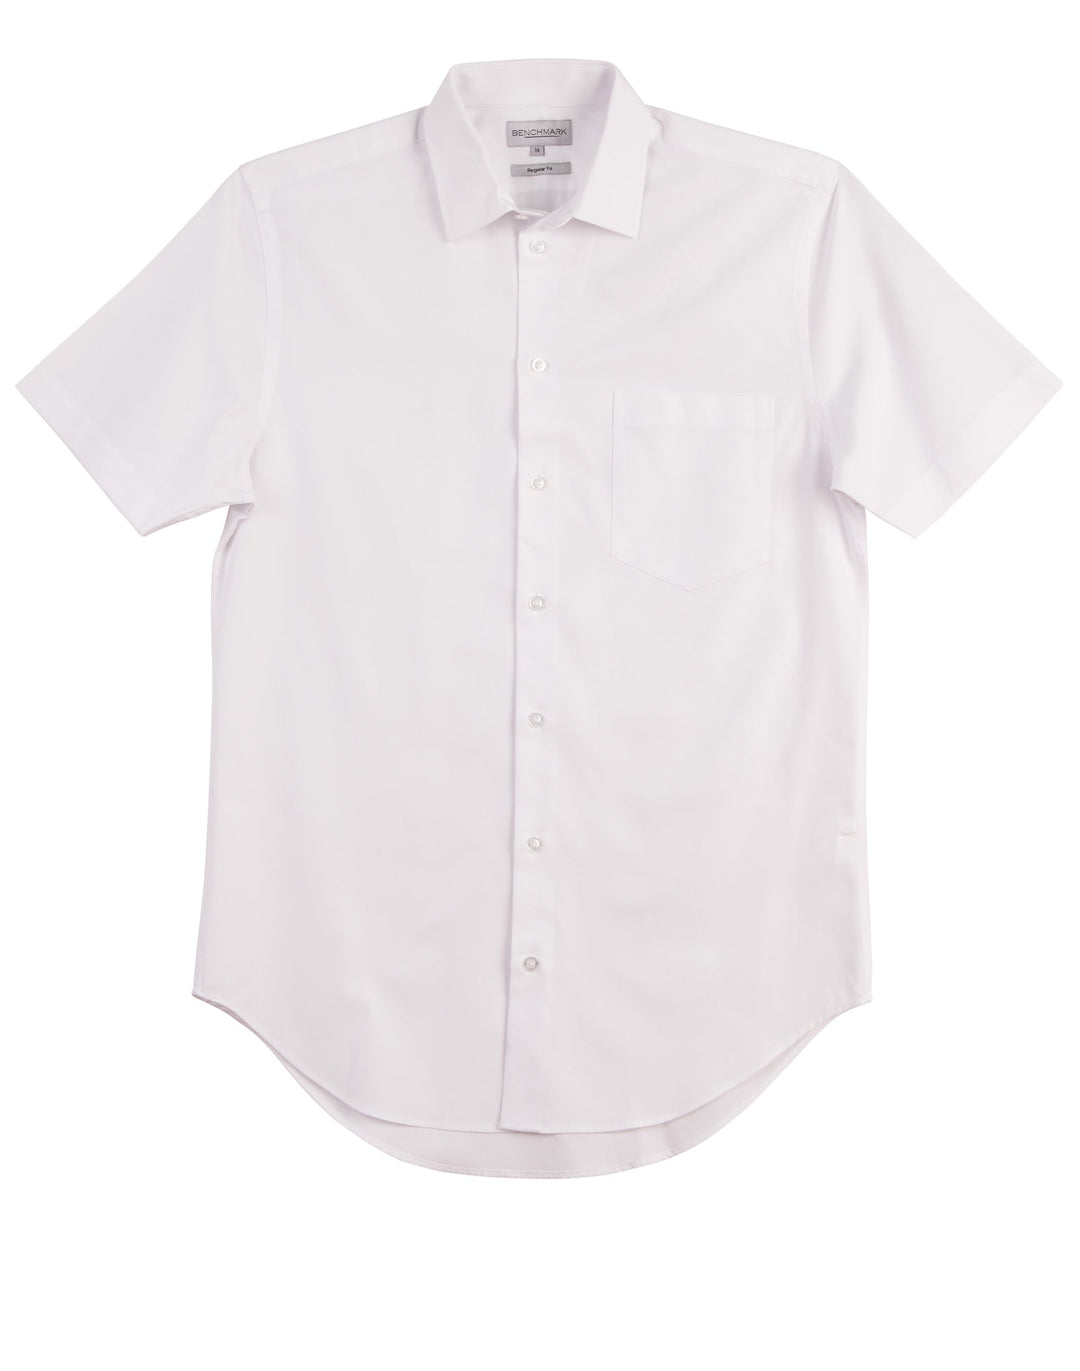 Benchmark M7040S Men's CVC Oxford Short Sleeve Shirt